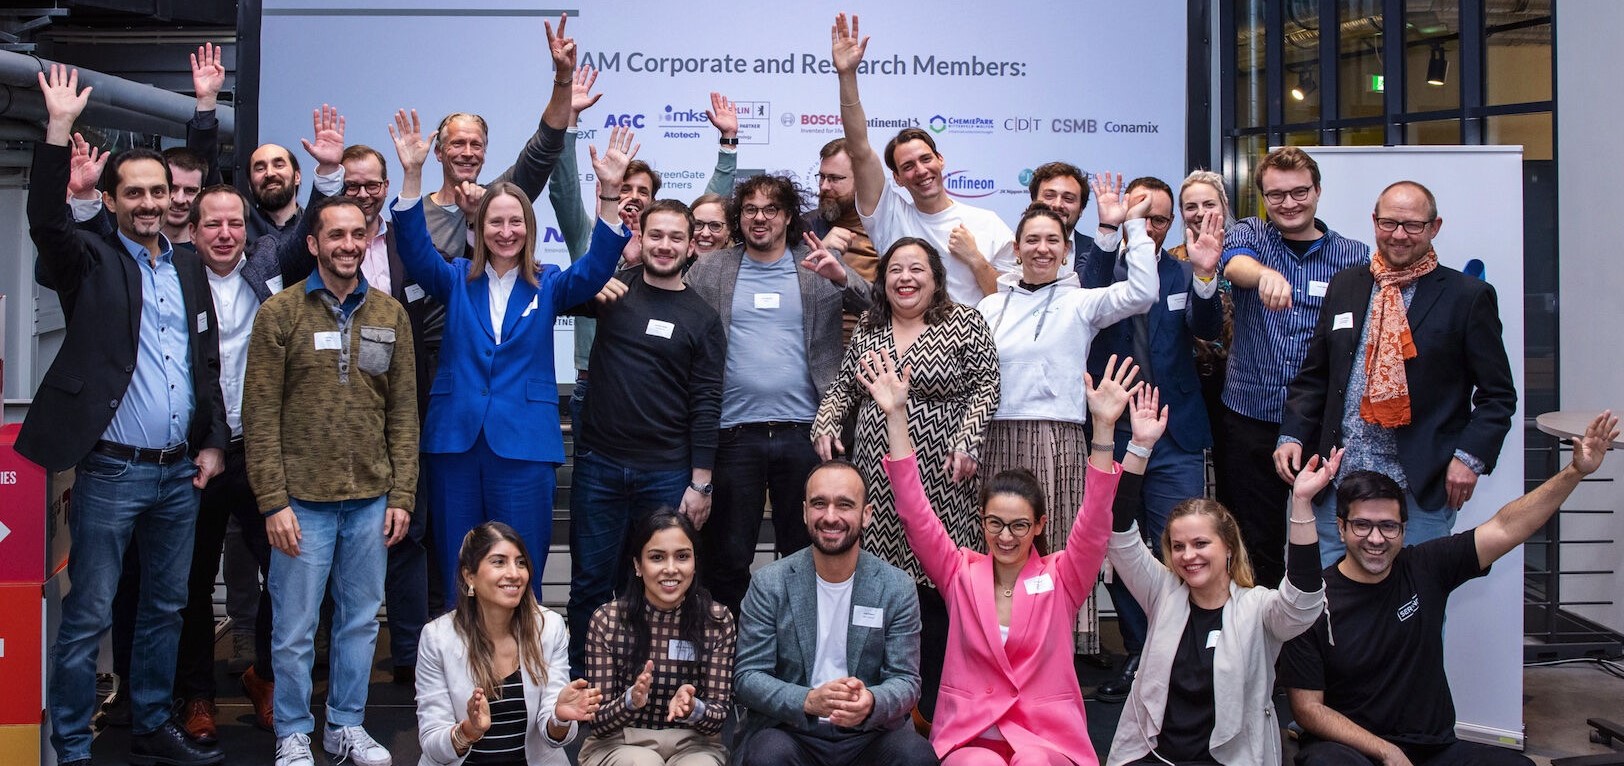 Global applause to celebrate winning startups